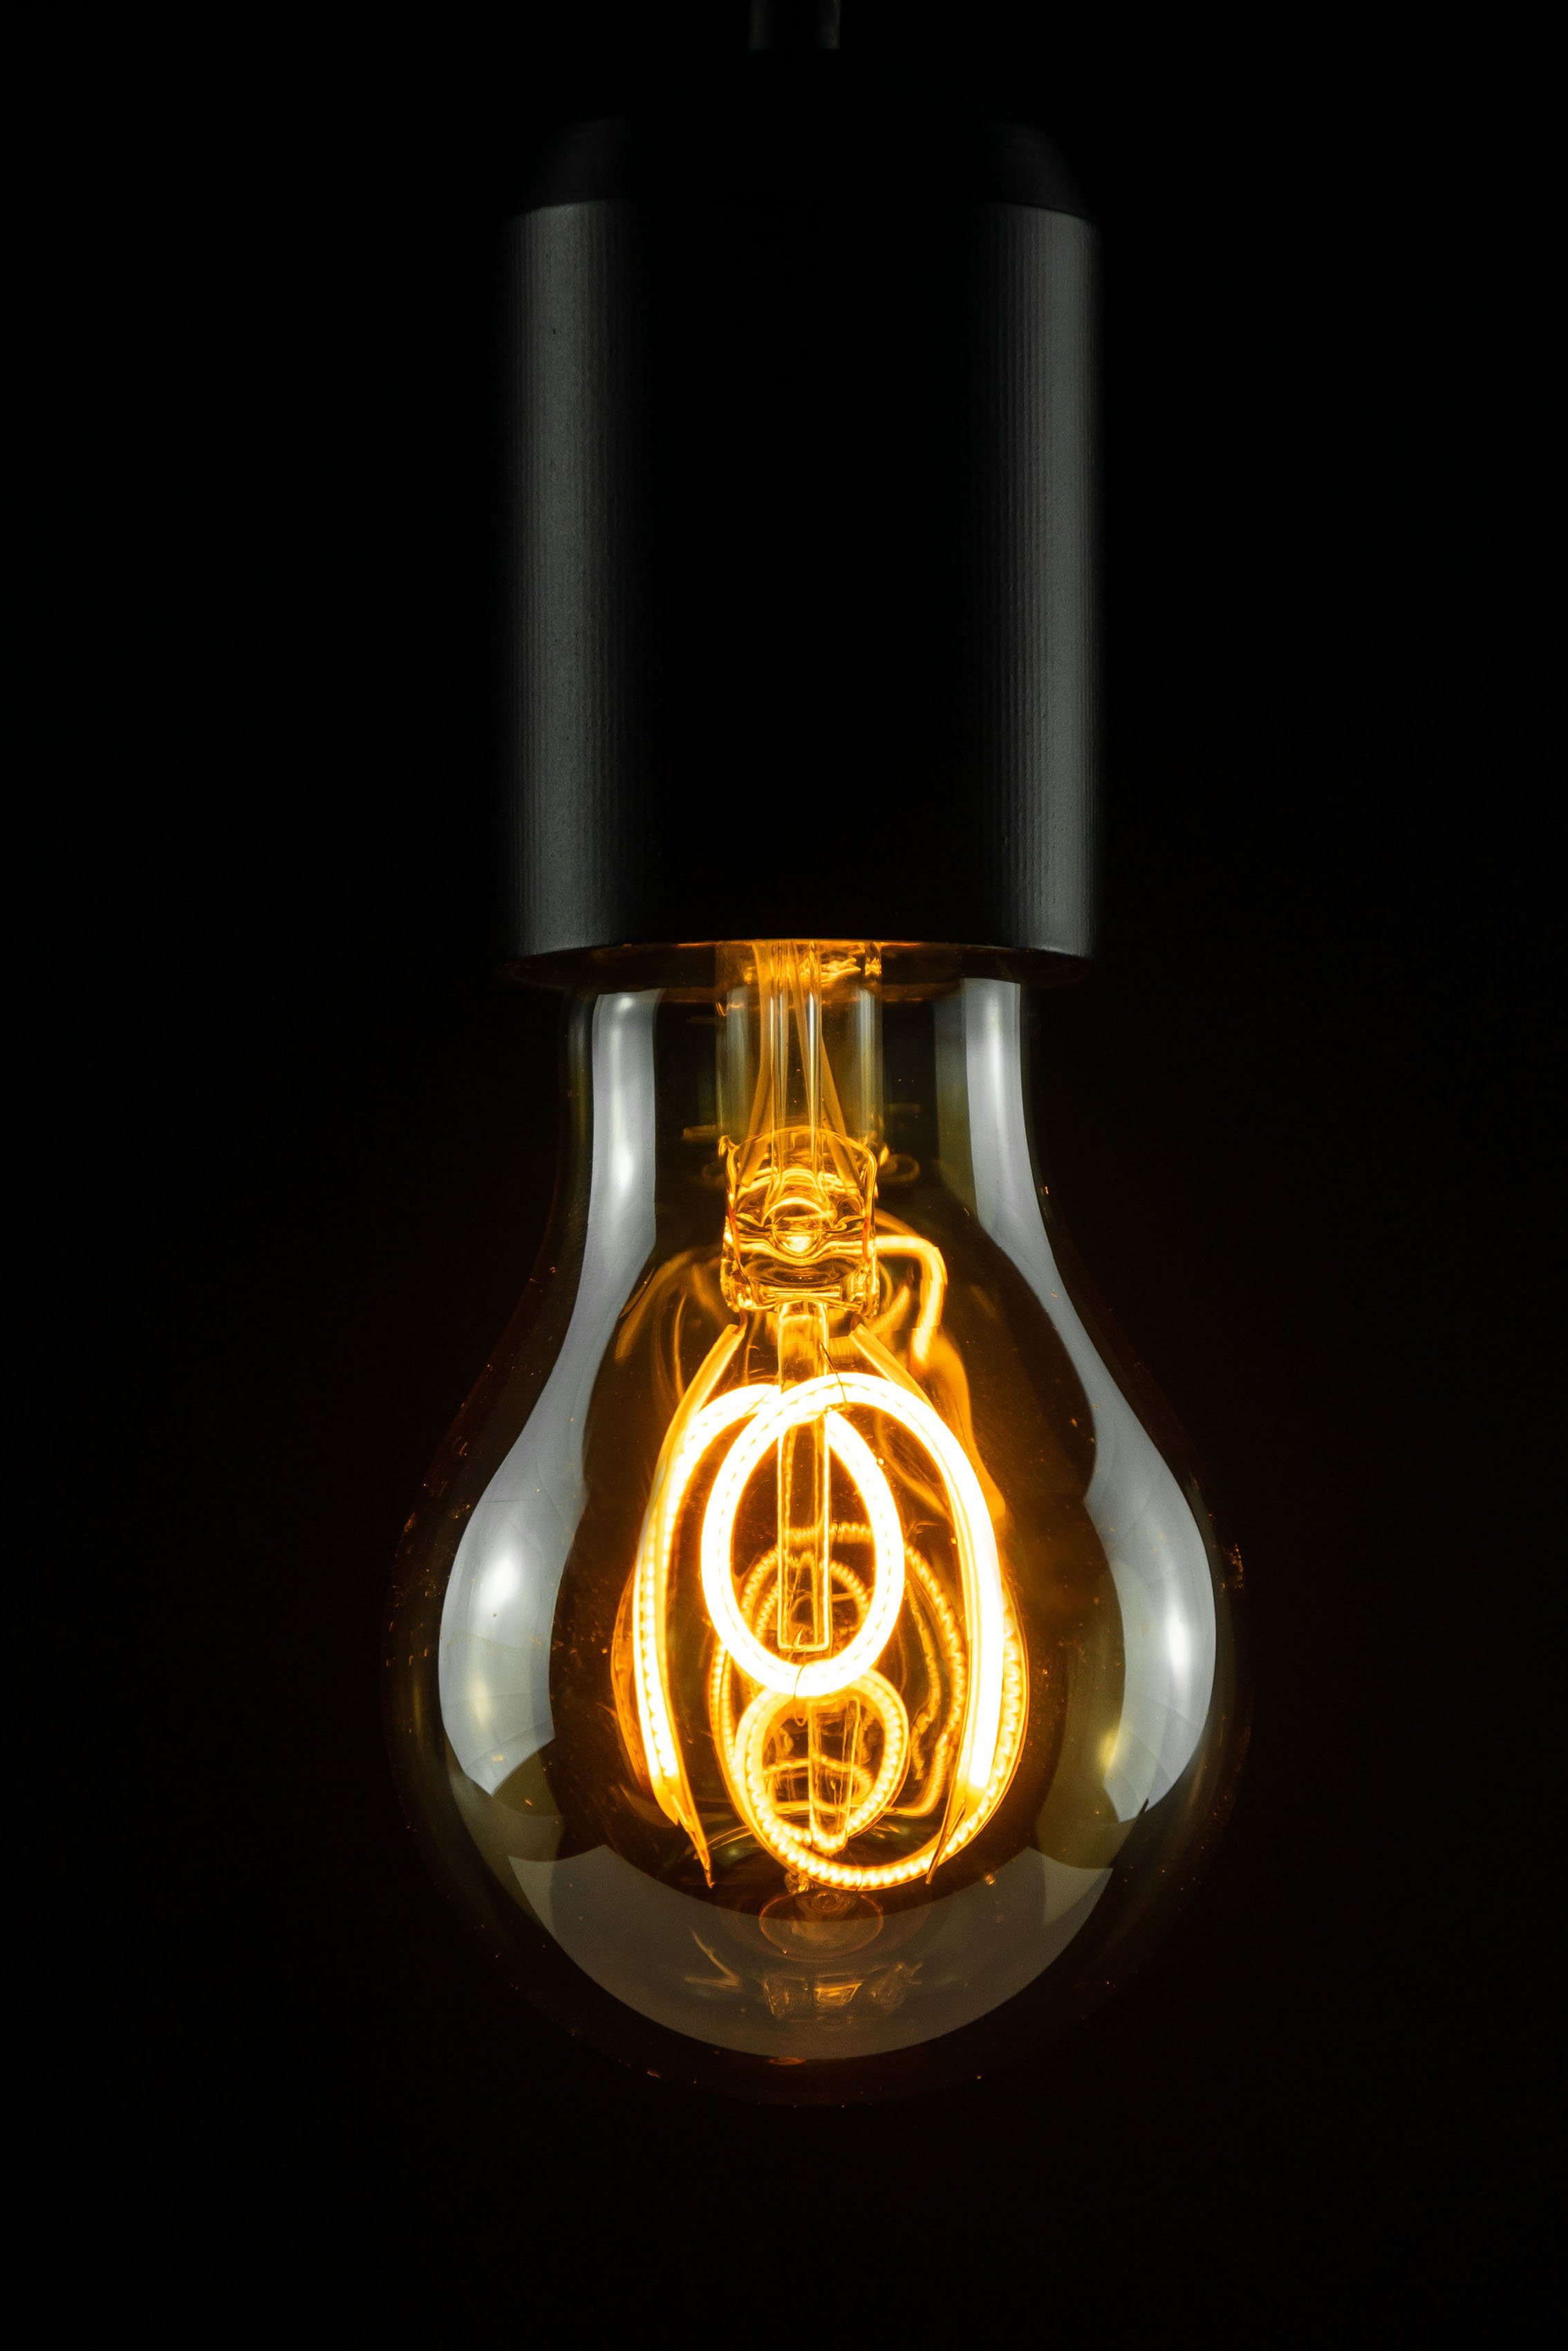 gold, SEGULA E27, E27 1 Warmweiß, St., Soft LED-Leuchtmittel dimmbar, Line, Soft Glühlampe